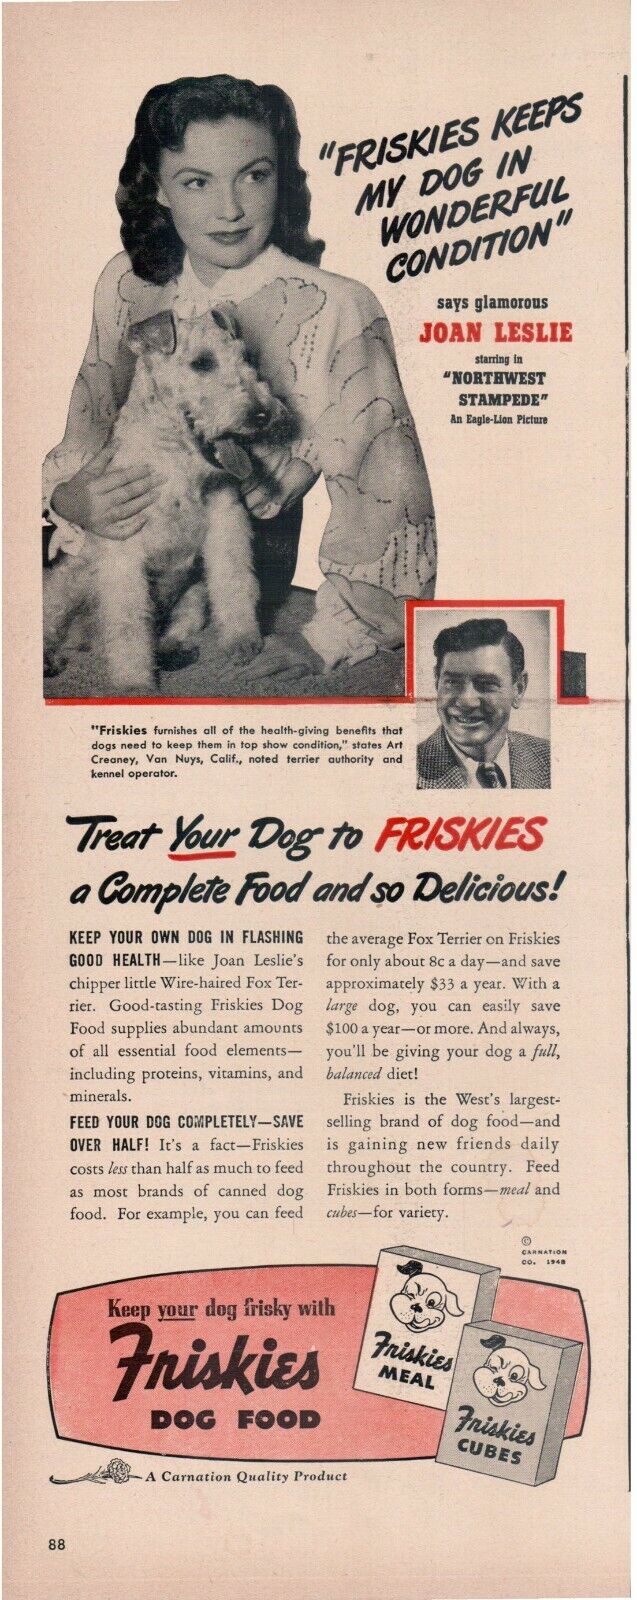 1948 Joan Leslie “Northwest Stampede” movie Friskies Dog clipped ad 14x5.5”